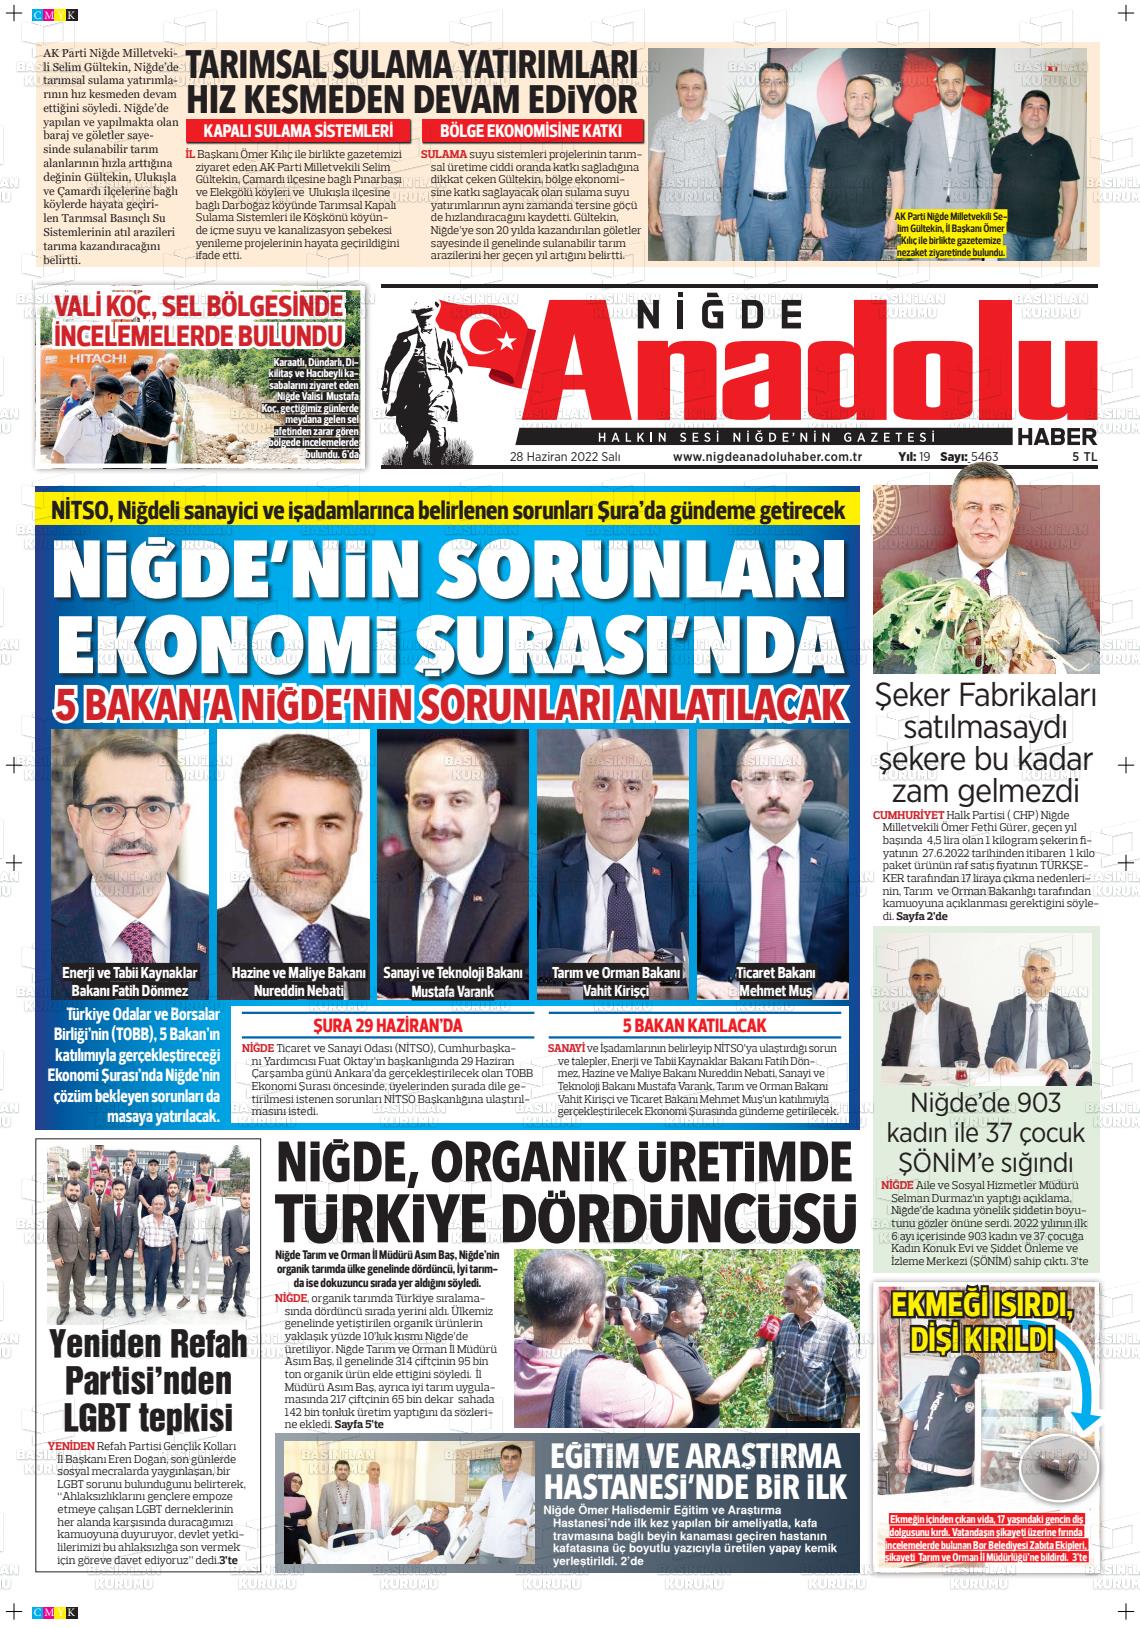 28 Haziran 2022 Niğde Anadolu Haber Gazete Manşeti